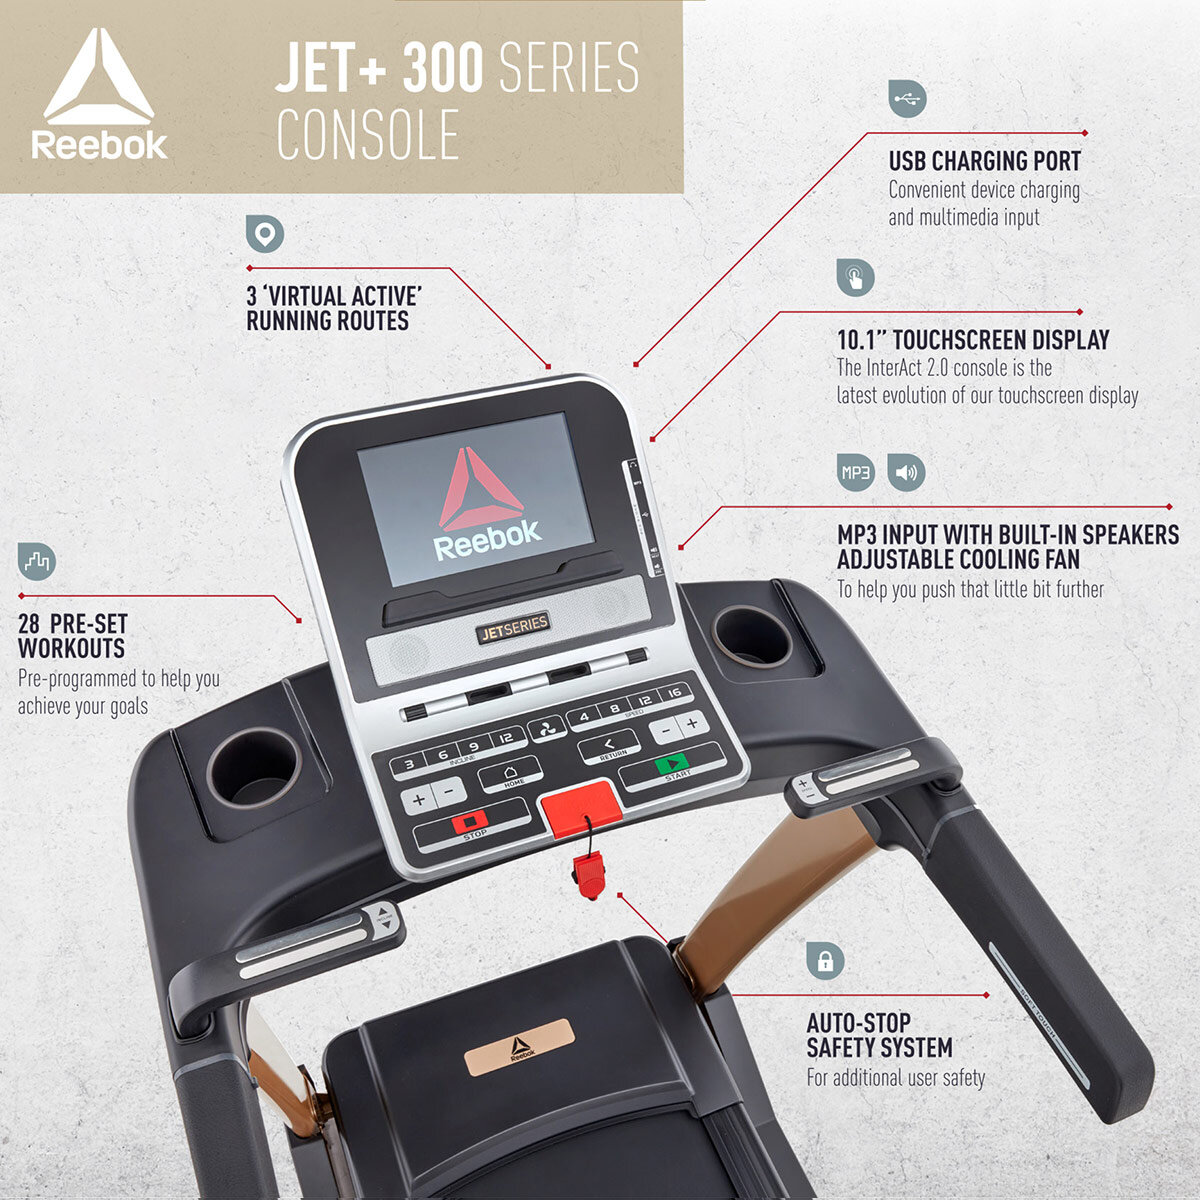 Image for Reebok Jet 300+ Treadmill